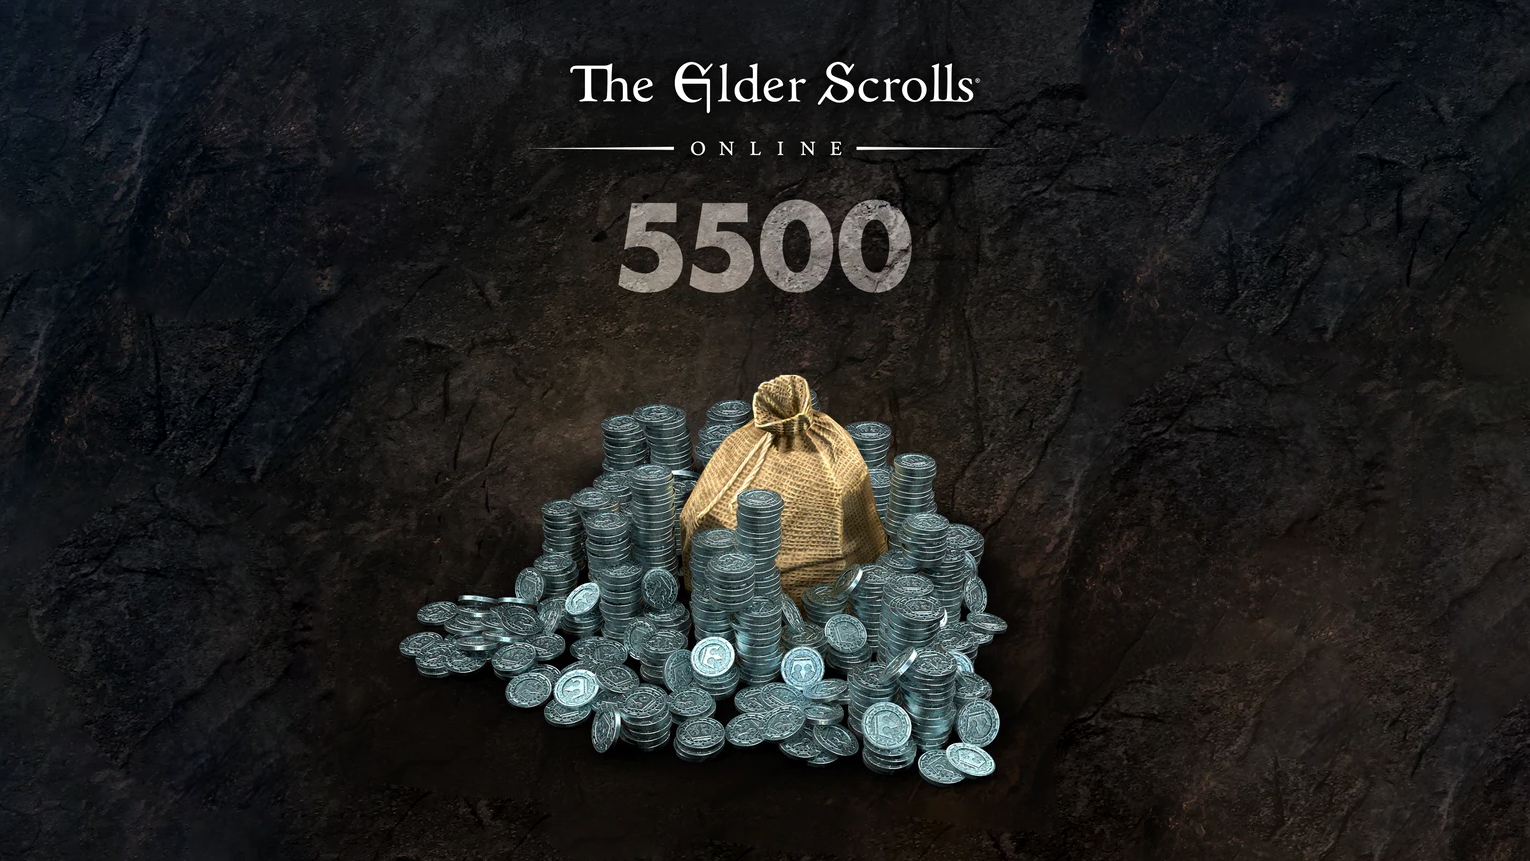 The Elder Scrolls Online: Tamriel Unlimited - 5500 Crowns XBOX One CD Key, 35.02$